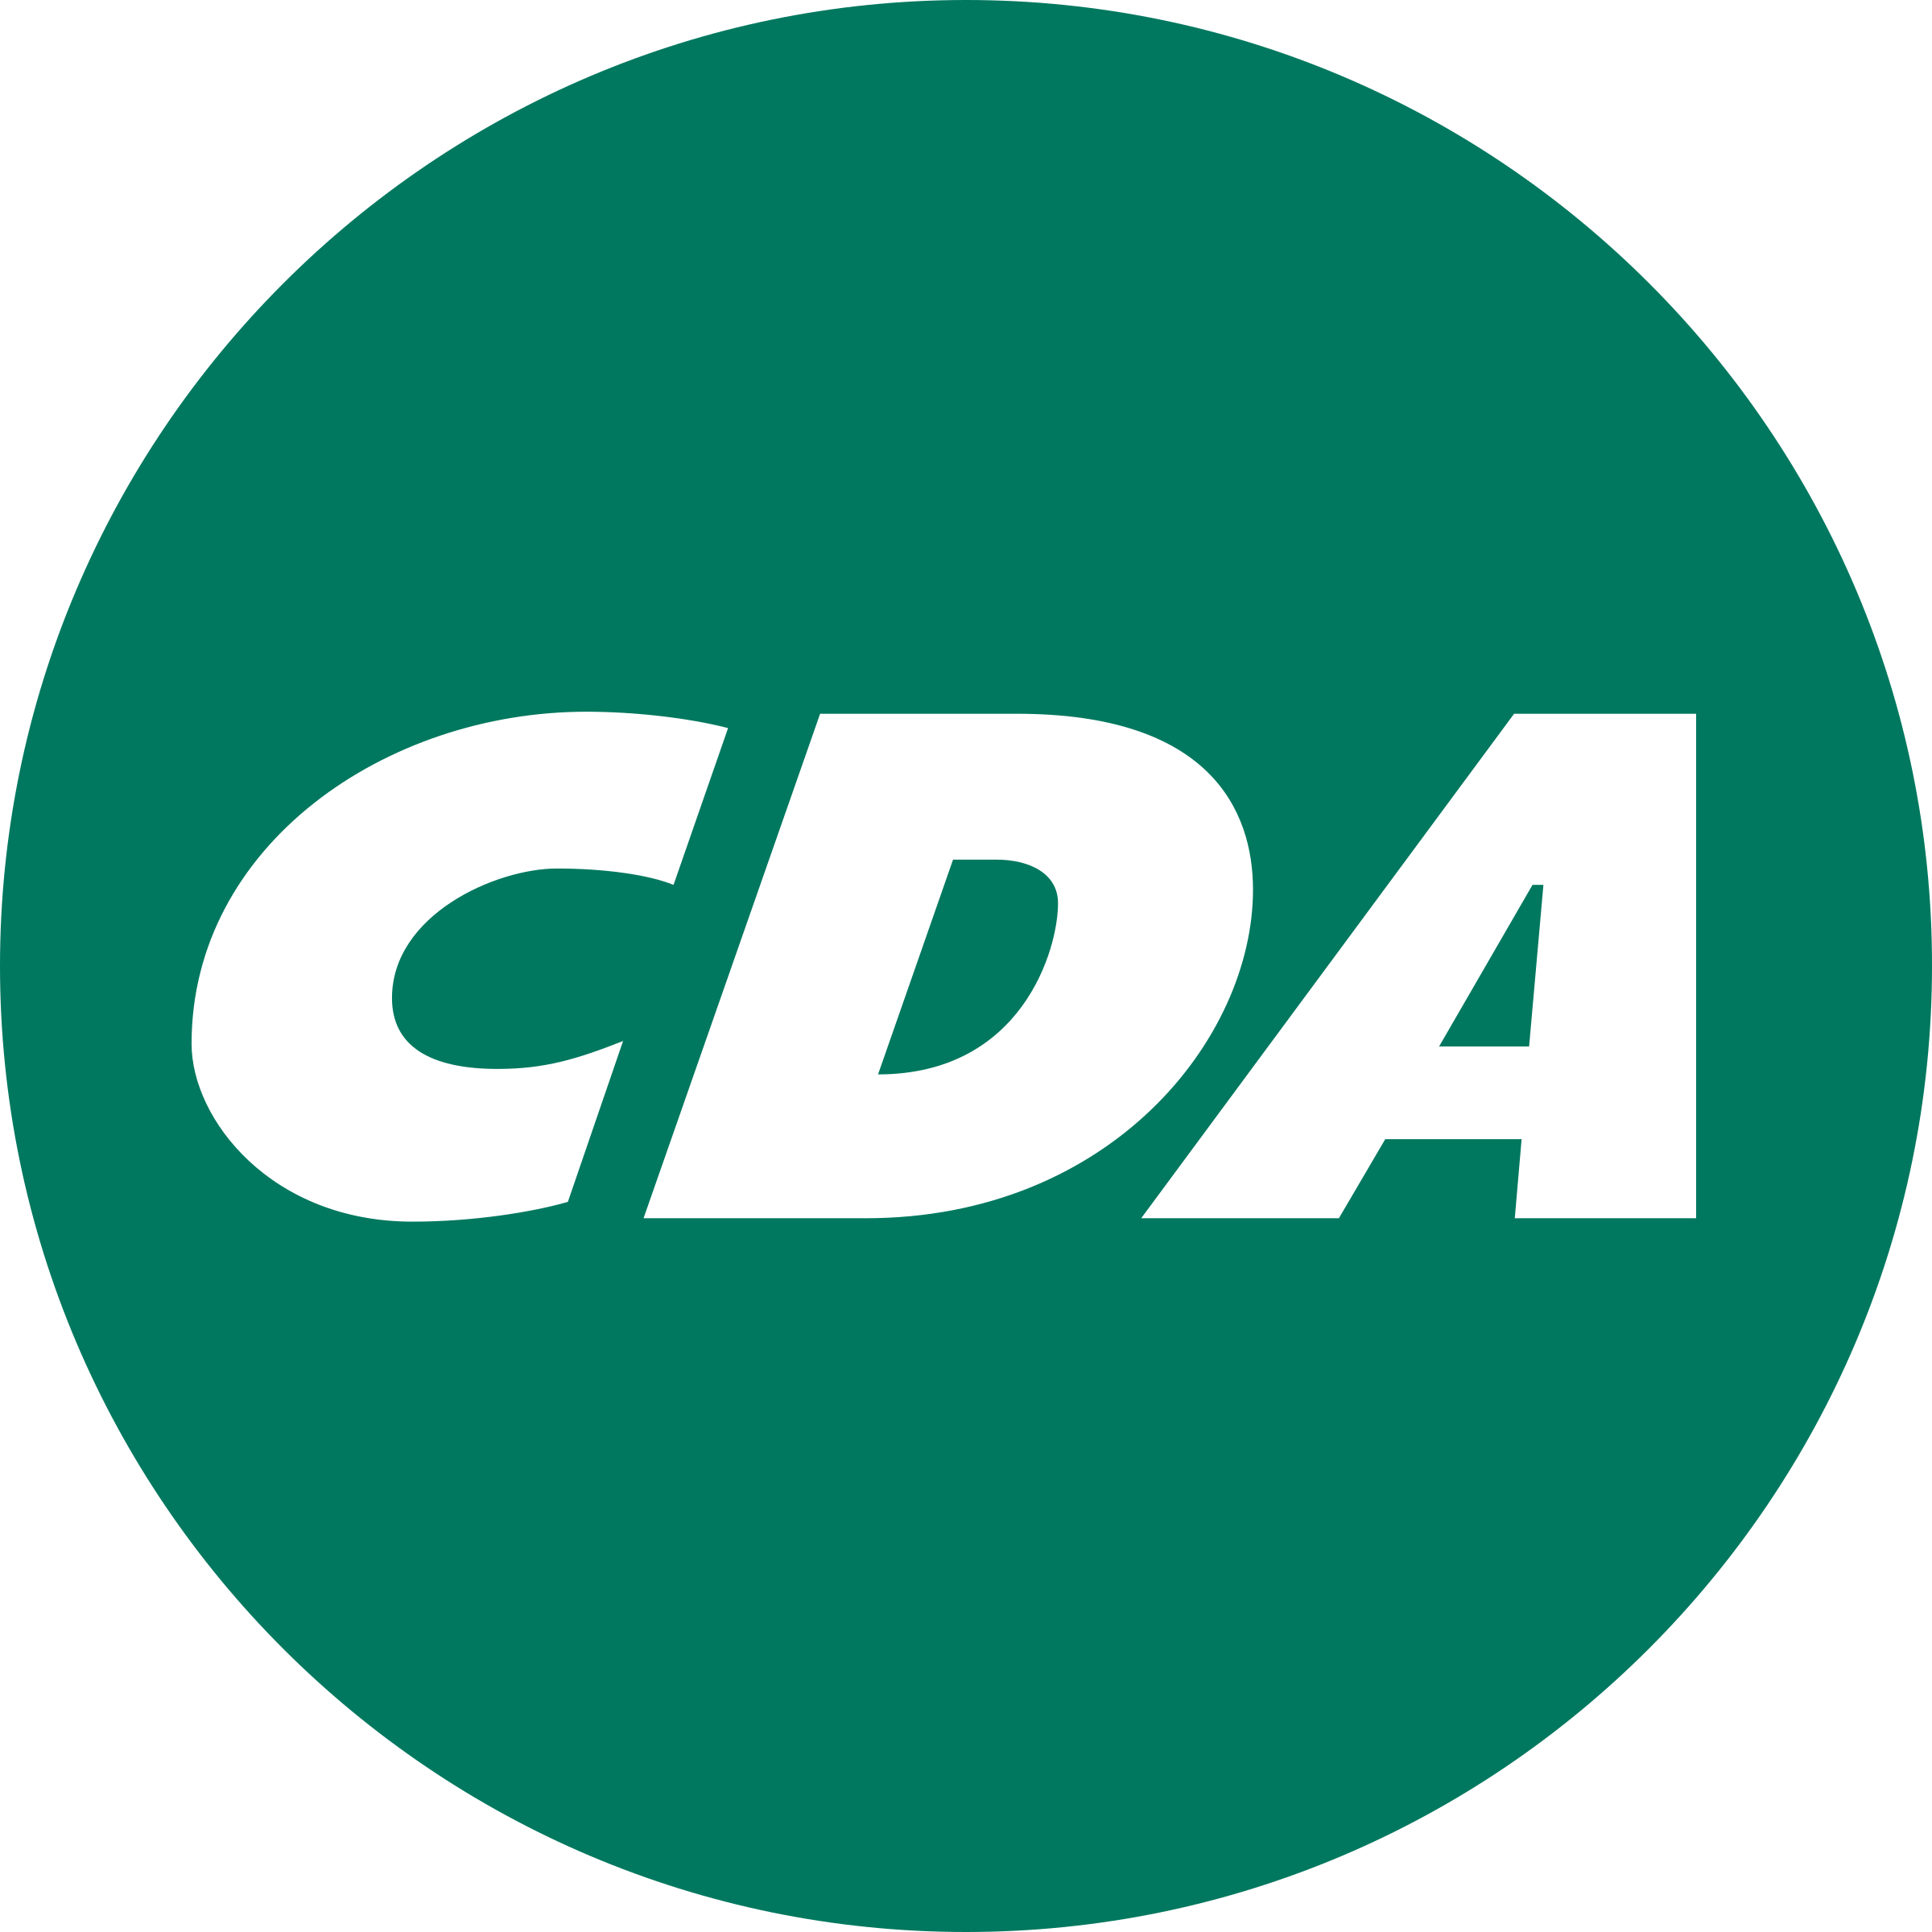 CDA Logo - CDA Logo PNG Transparent & SVG Vector - Freebie Supply